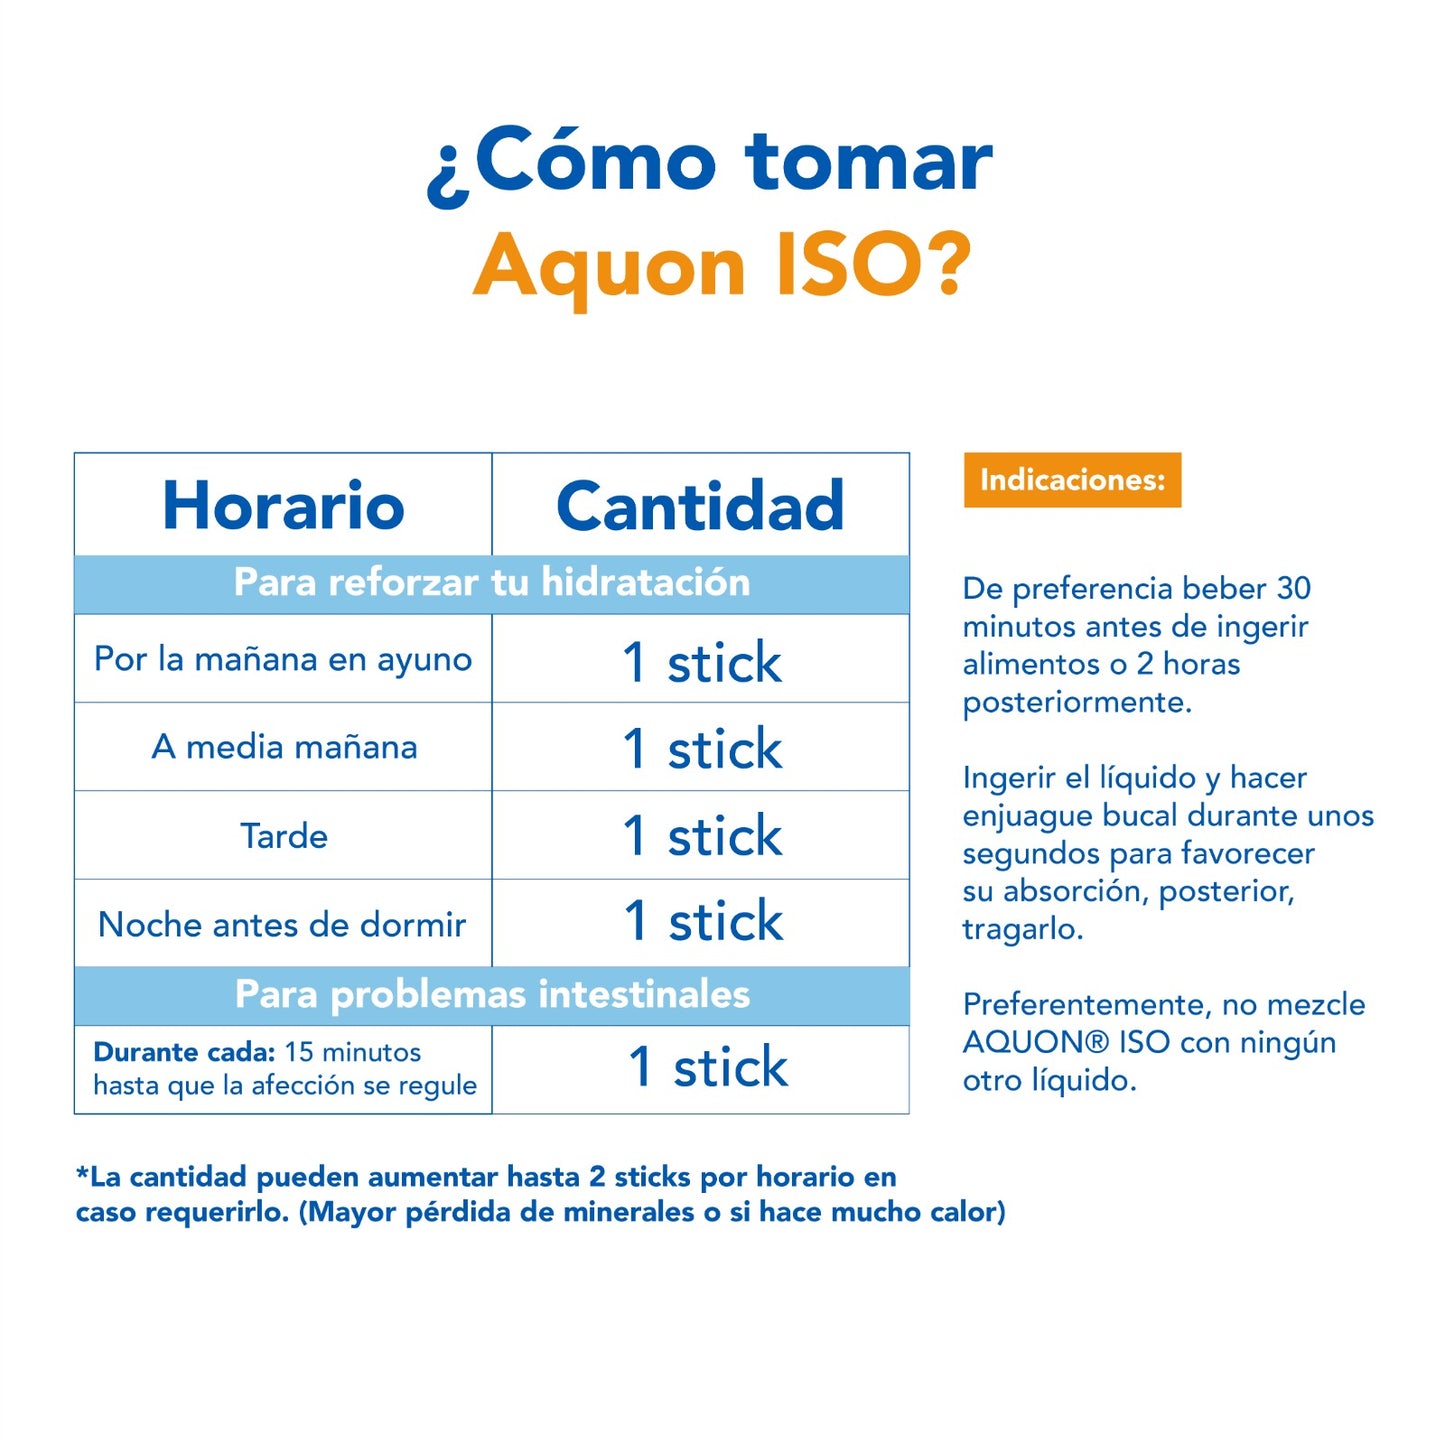 Aquon Iso® Electrolitos - Caja contiene 30 ó 10 sticks, cada stick es de 10 ml